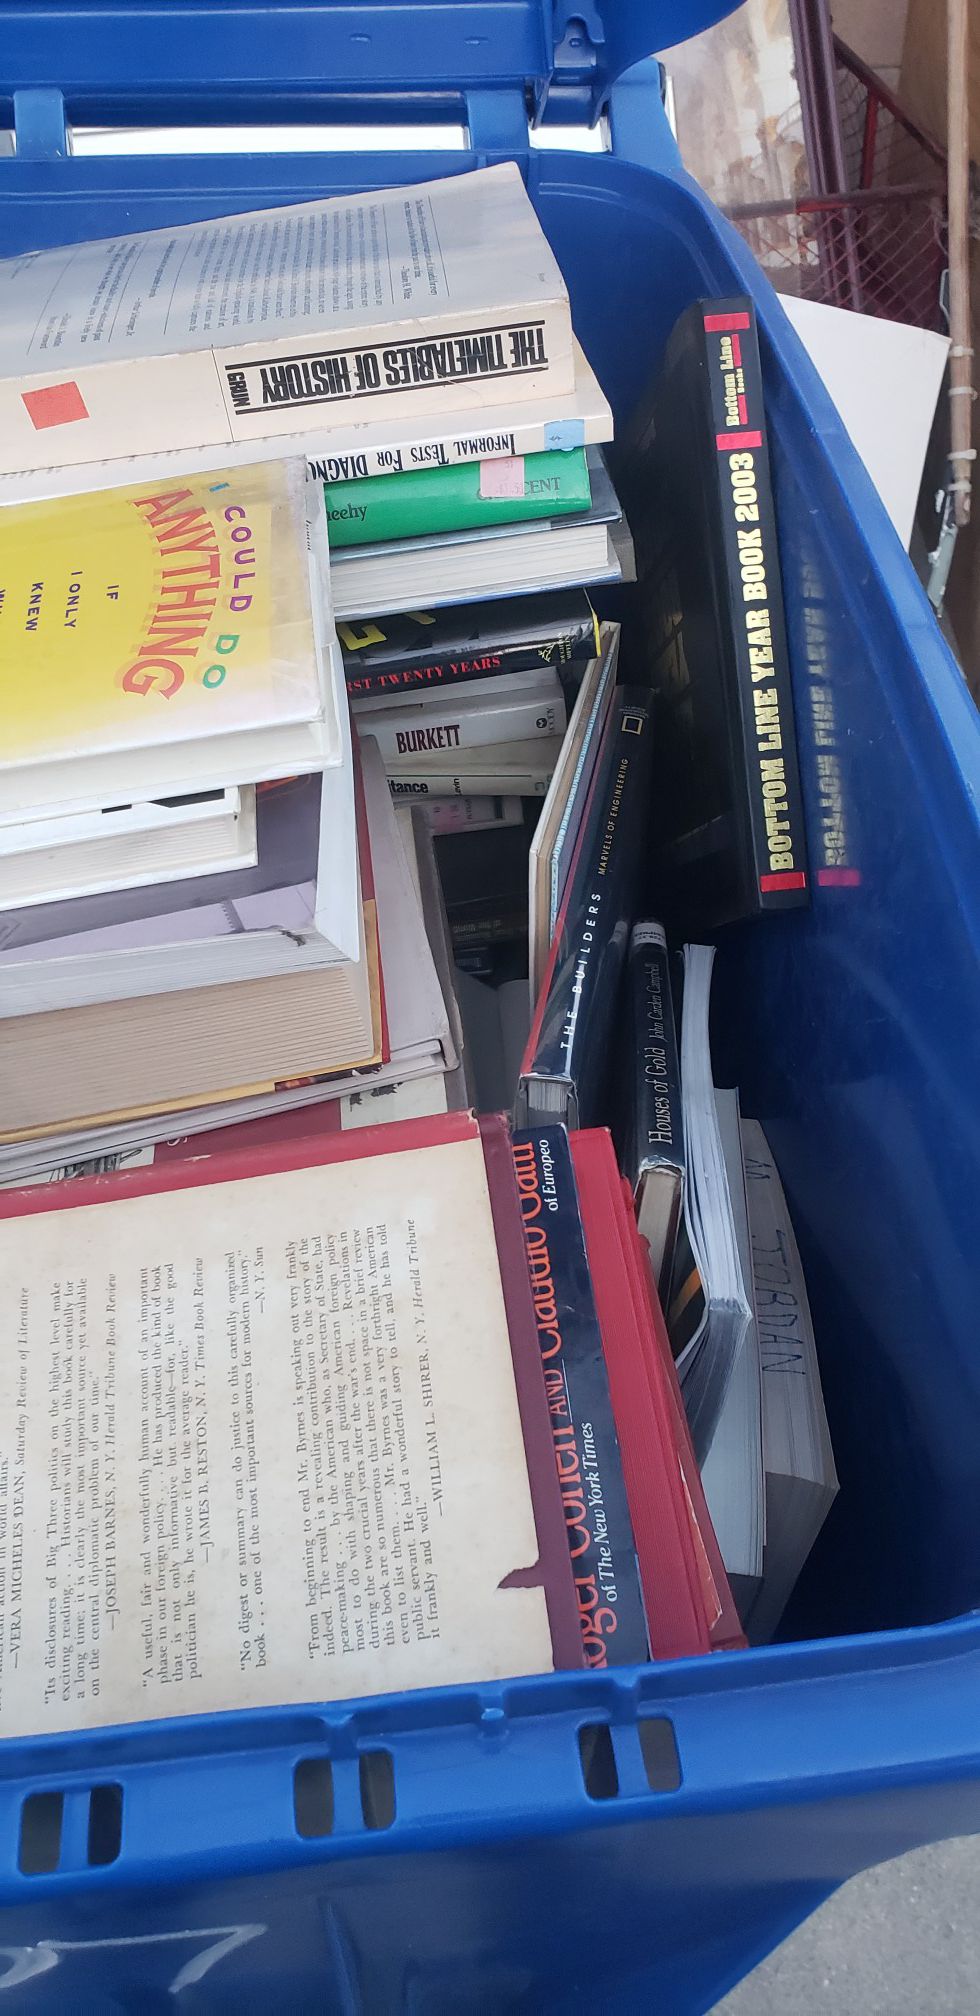 Recycle bin full of books